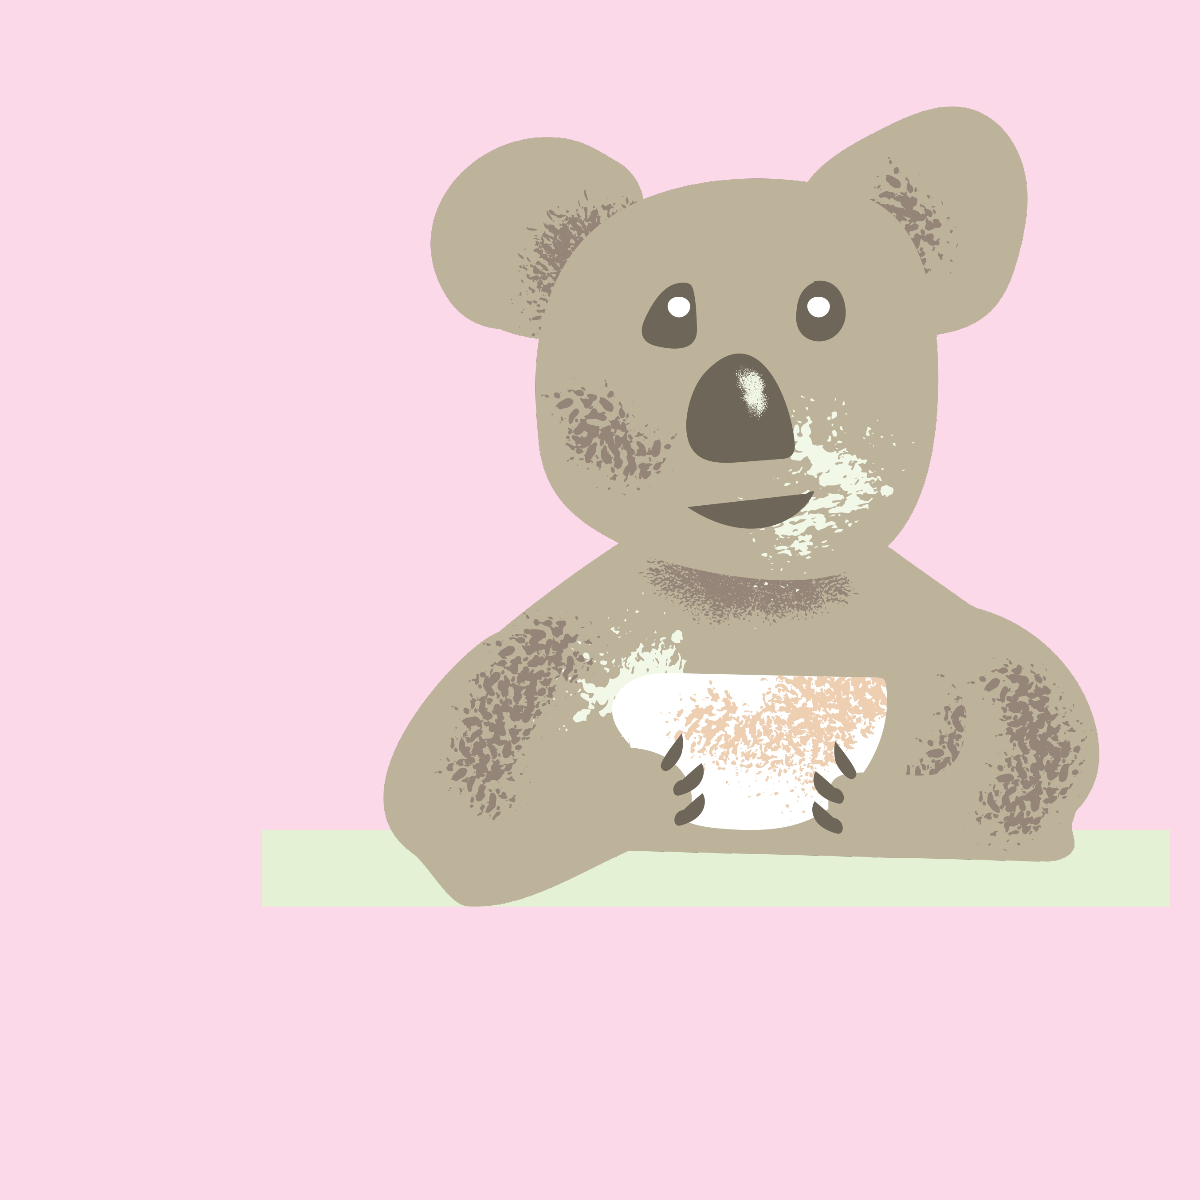 Illustrated Koala holding a bowl